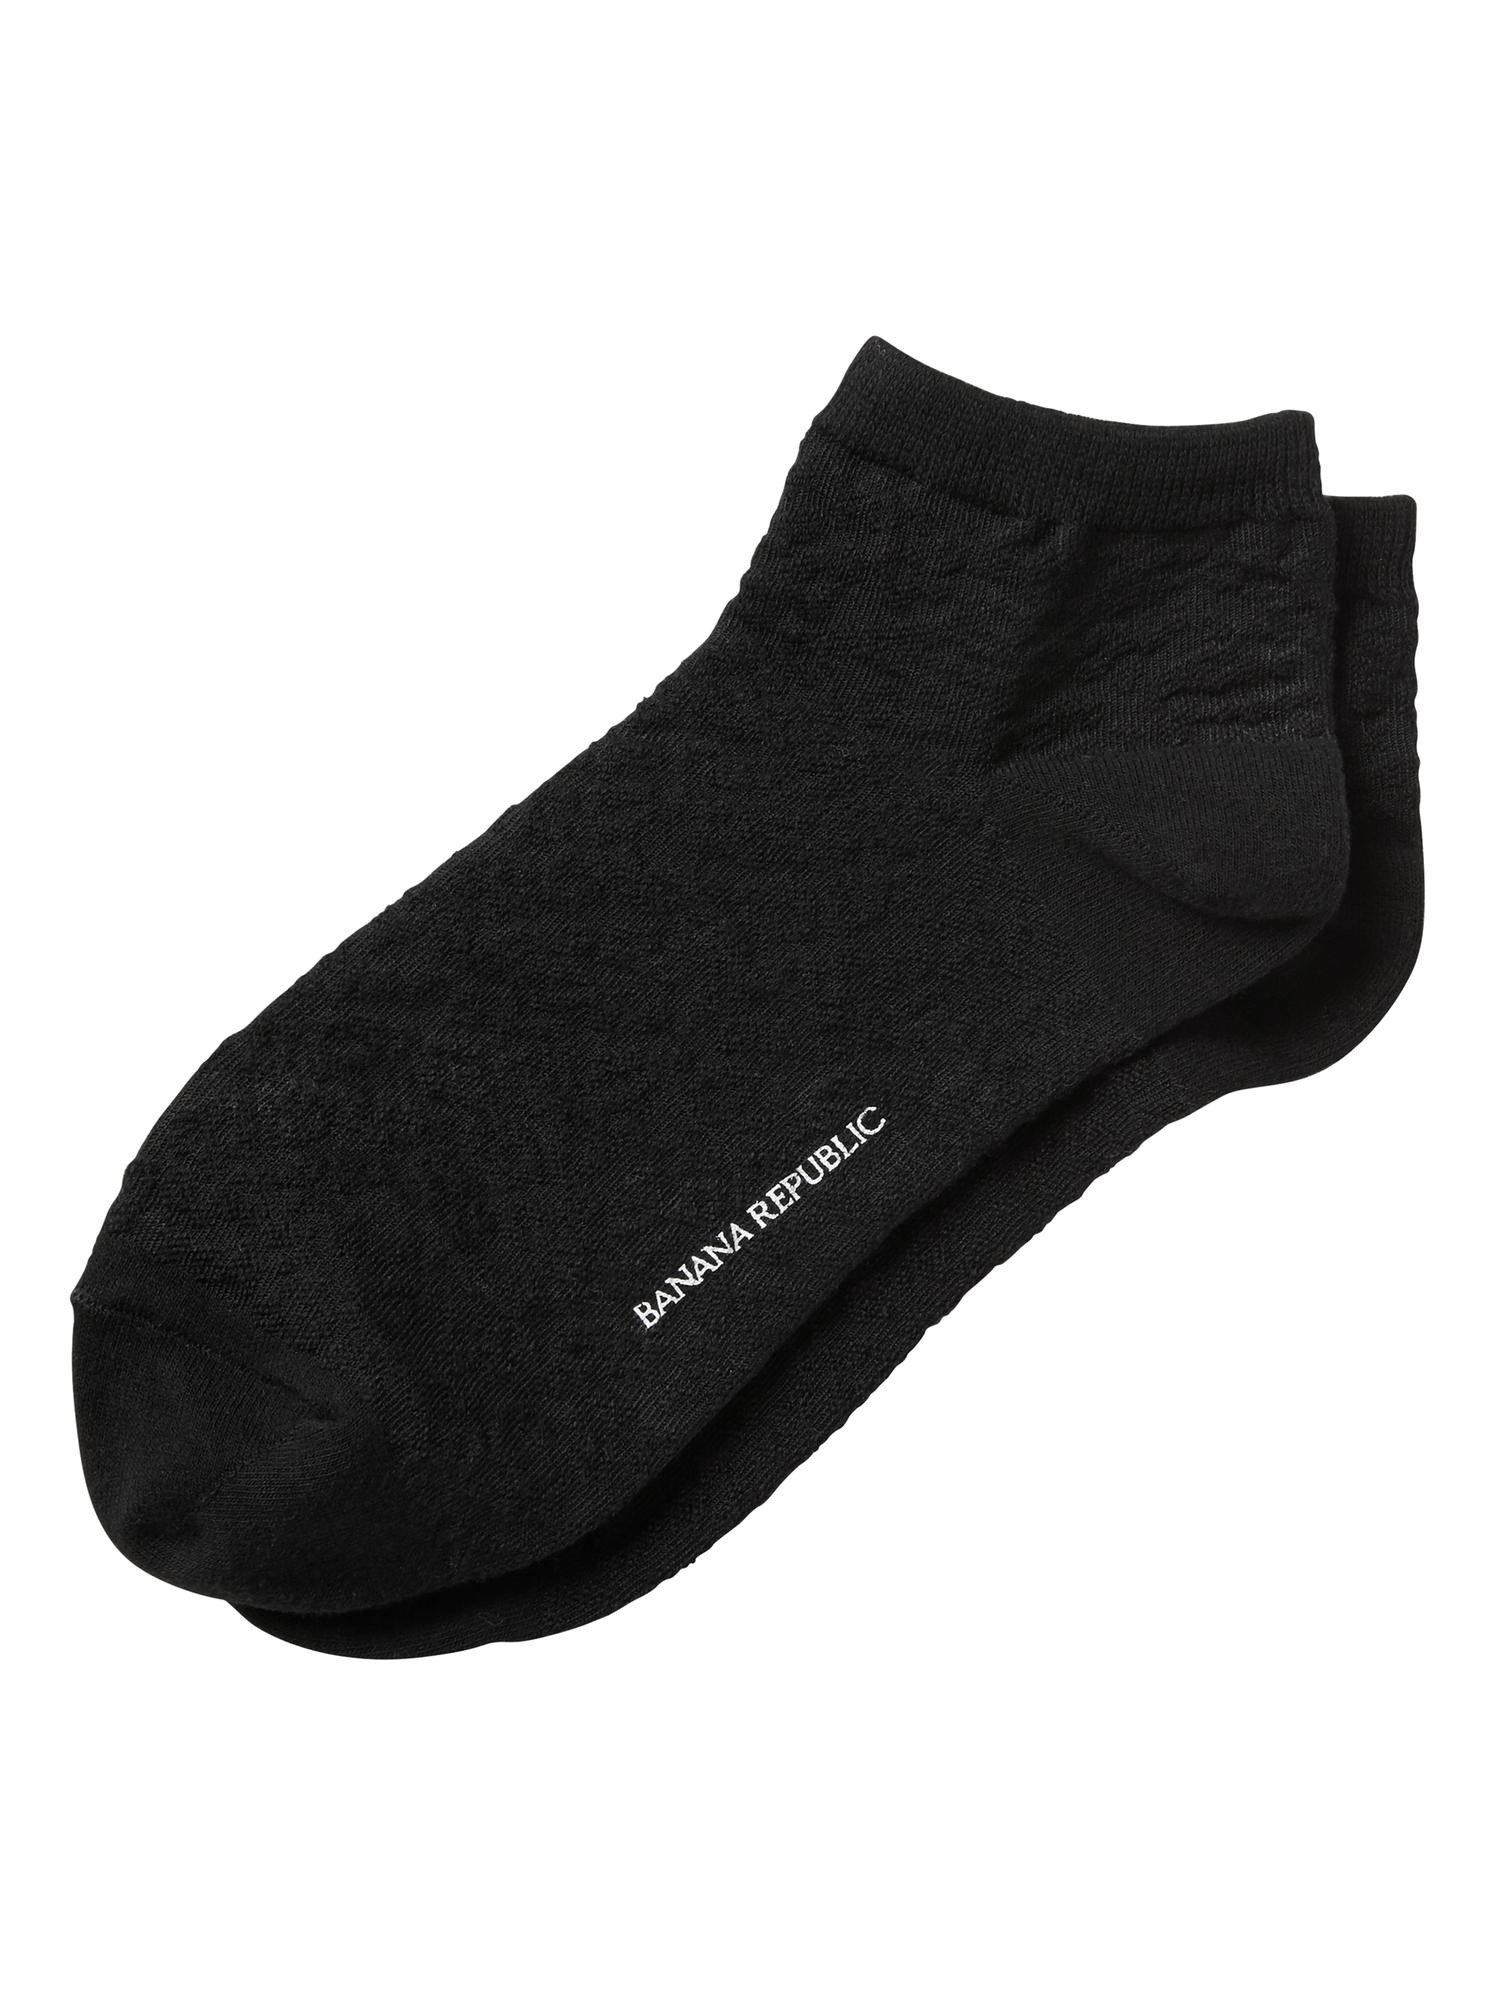 Desenli soket çorap product image